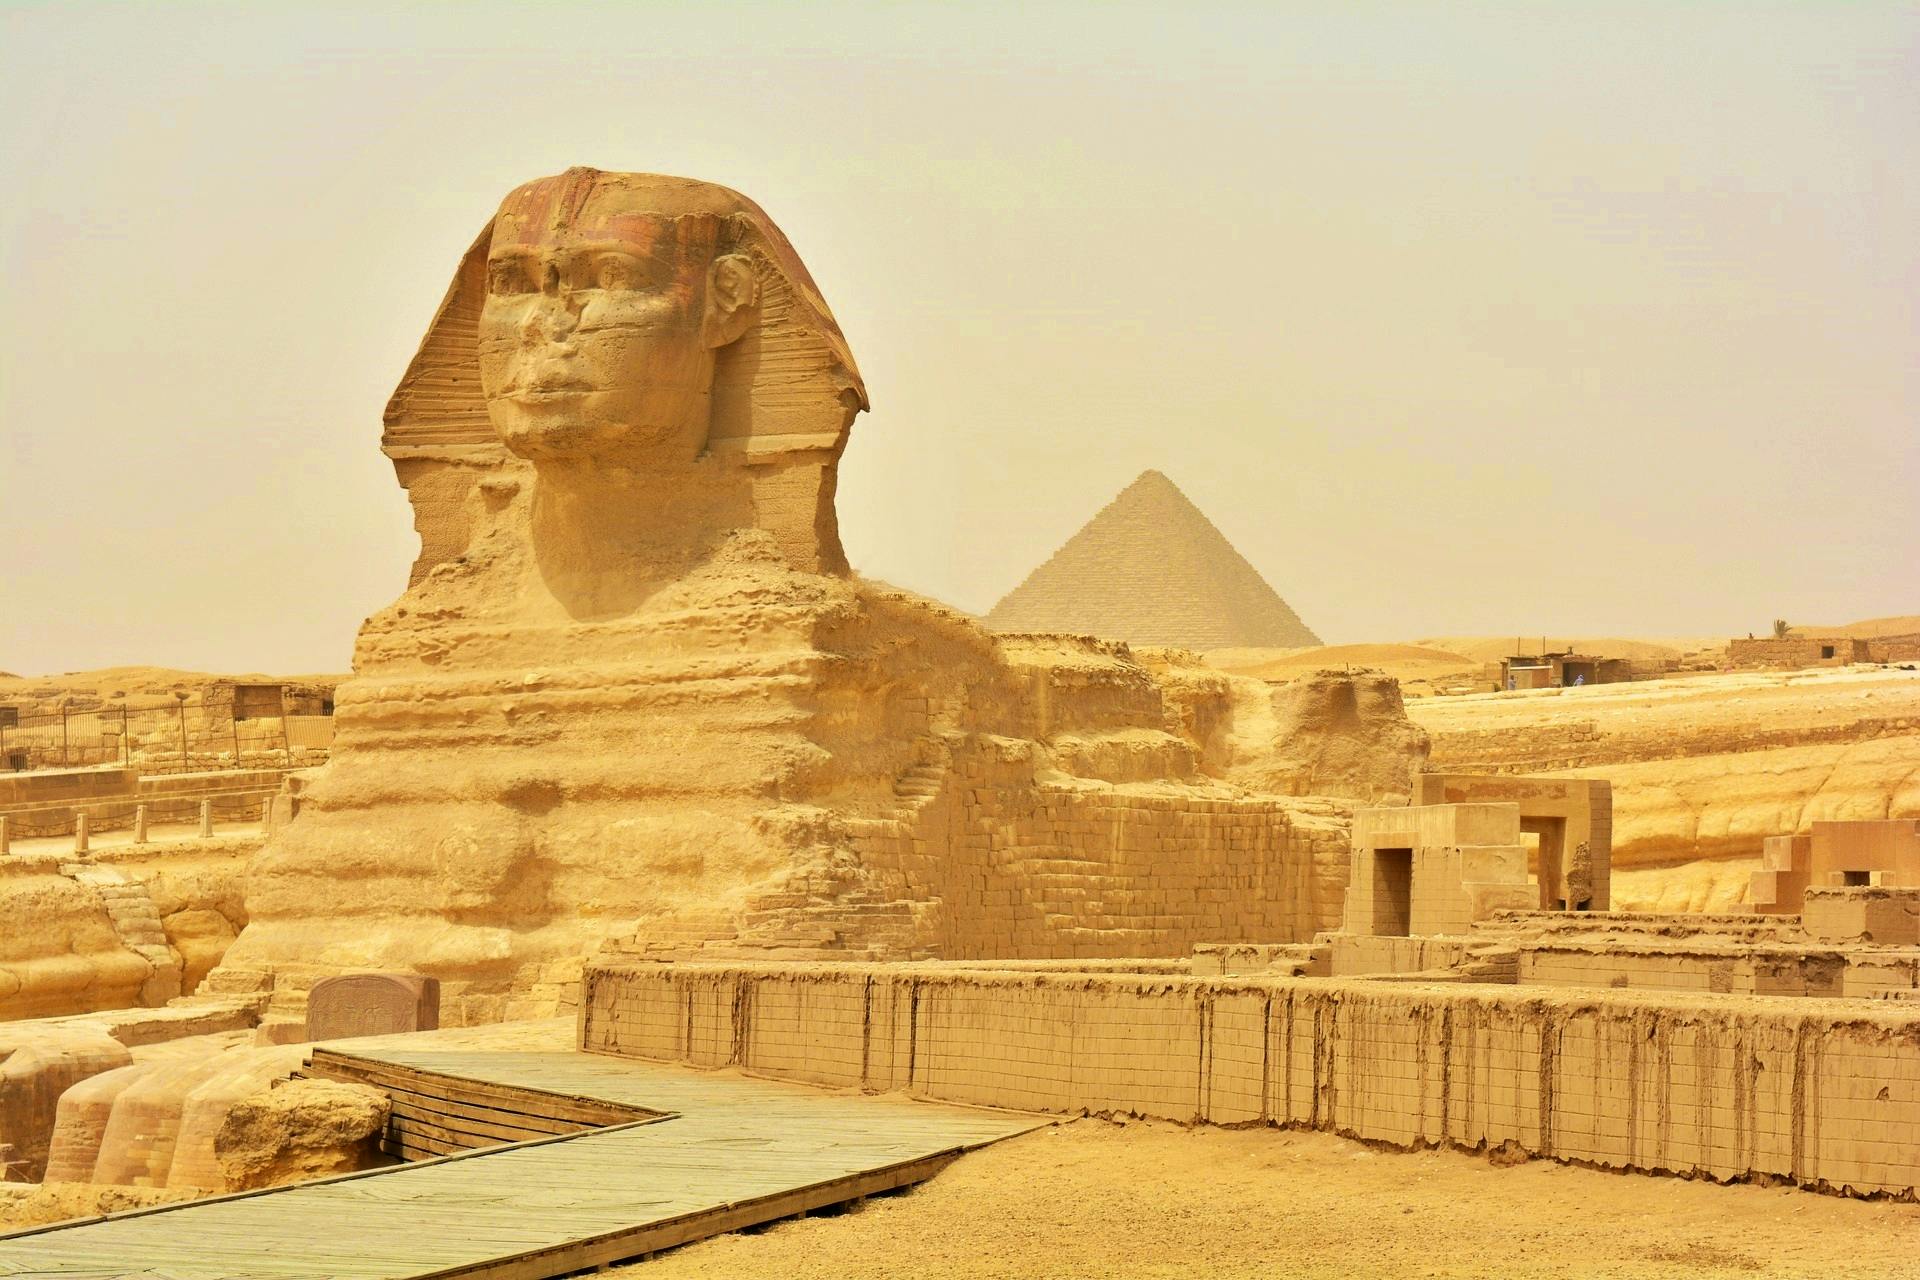 Intera giornata alle Piramidi, alla Sfinge, a Menfi, a Saqara e a Dahshour